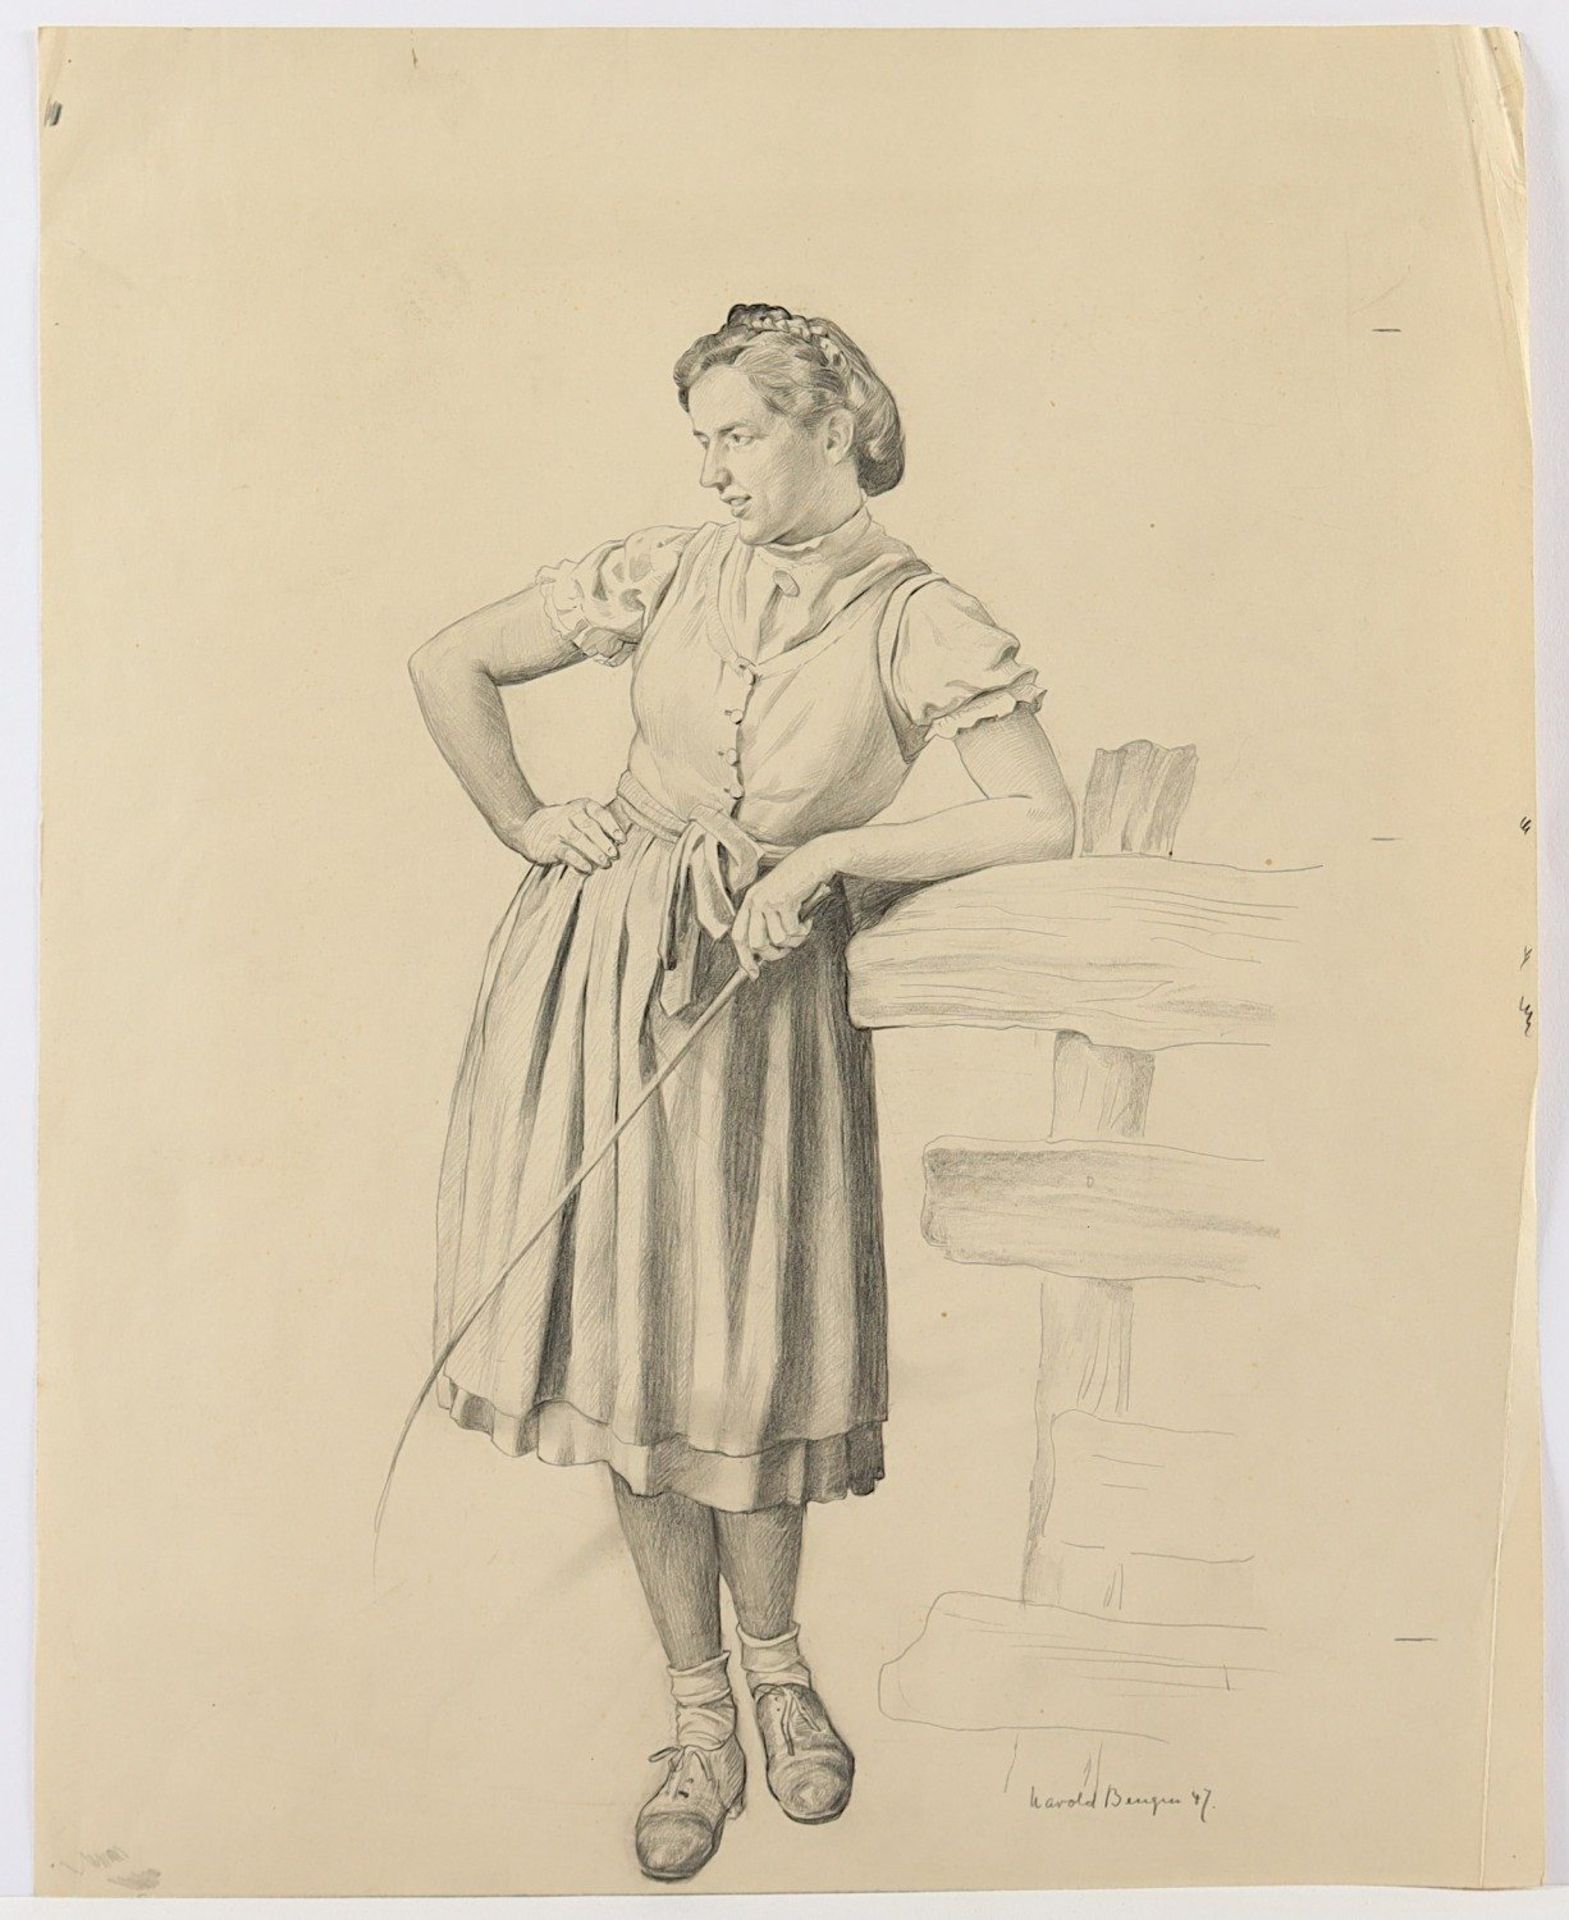 <de>BENGEN, Harold Tronson (1879-1962), "Portrait eines Bauernmädchens", Bleistift/Papier, 51 x 41, 